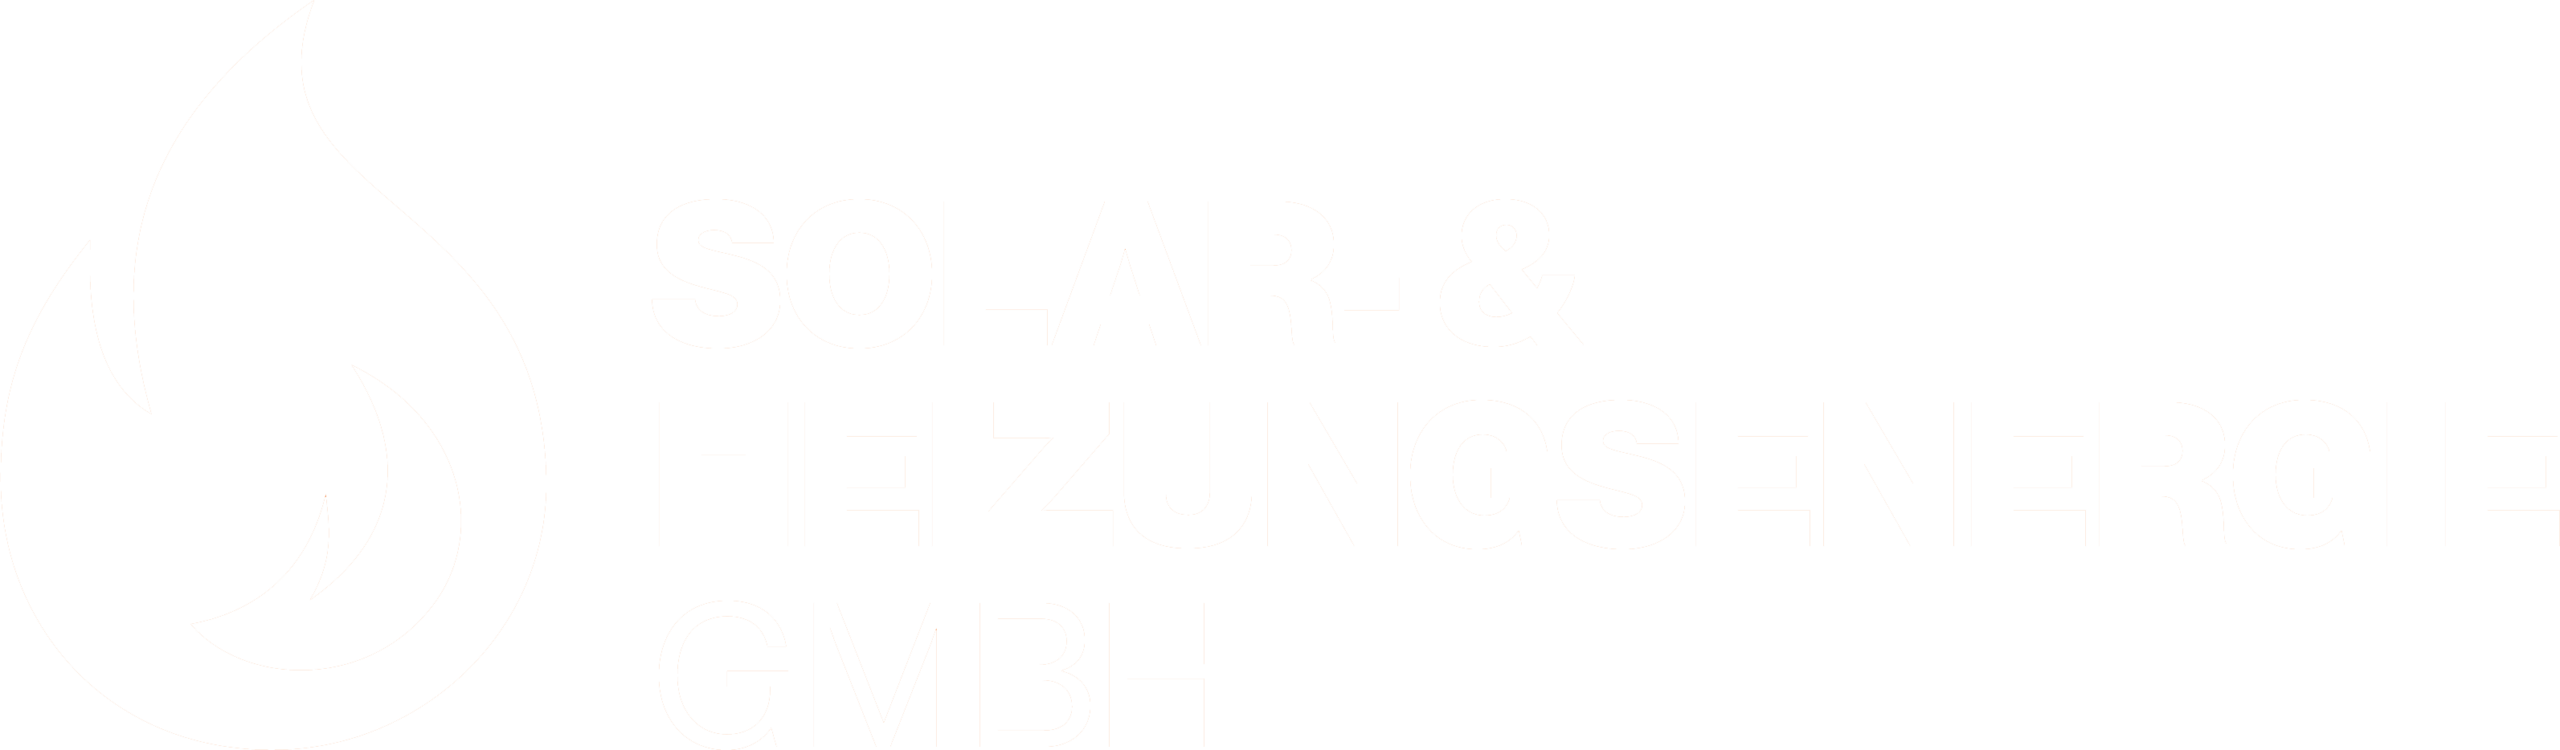 Heizungsenergie GmbH Logo